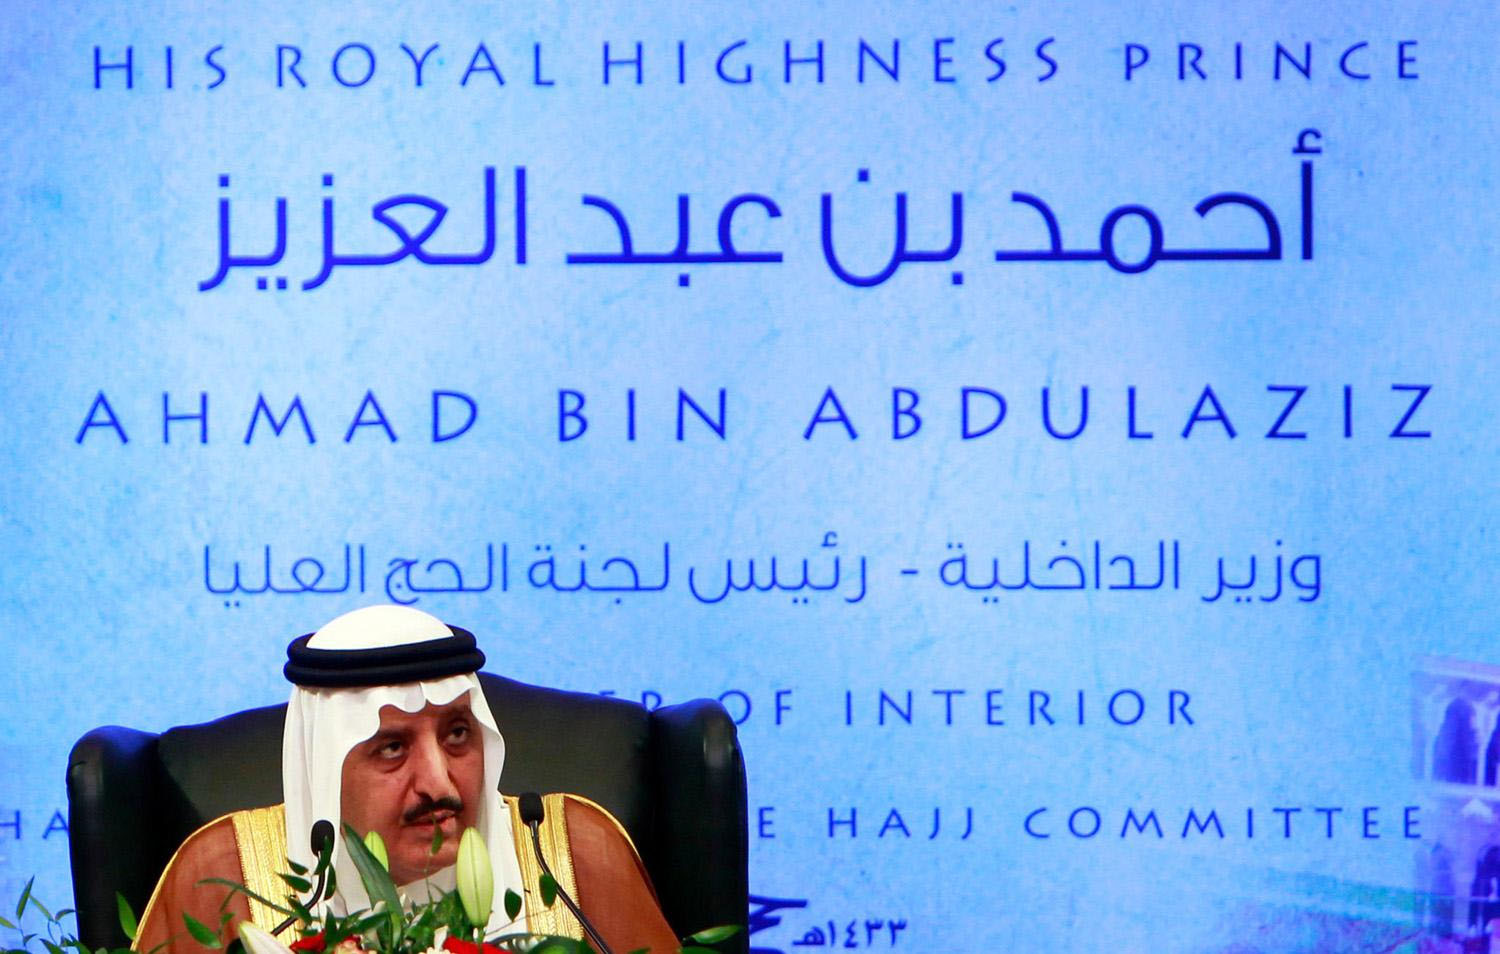 Prince Ahmed bin Abdulaziz al-Saud